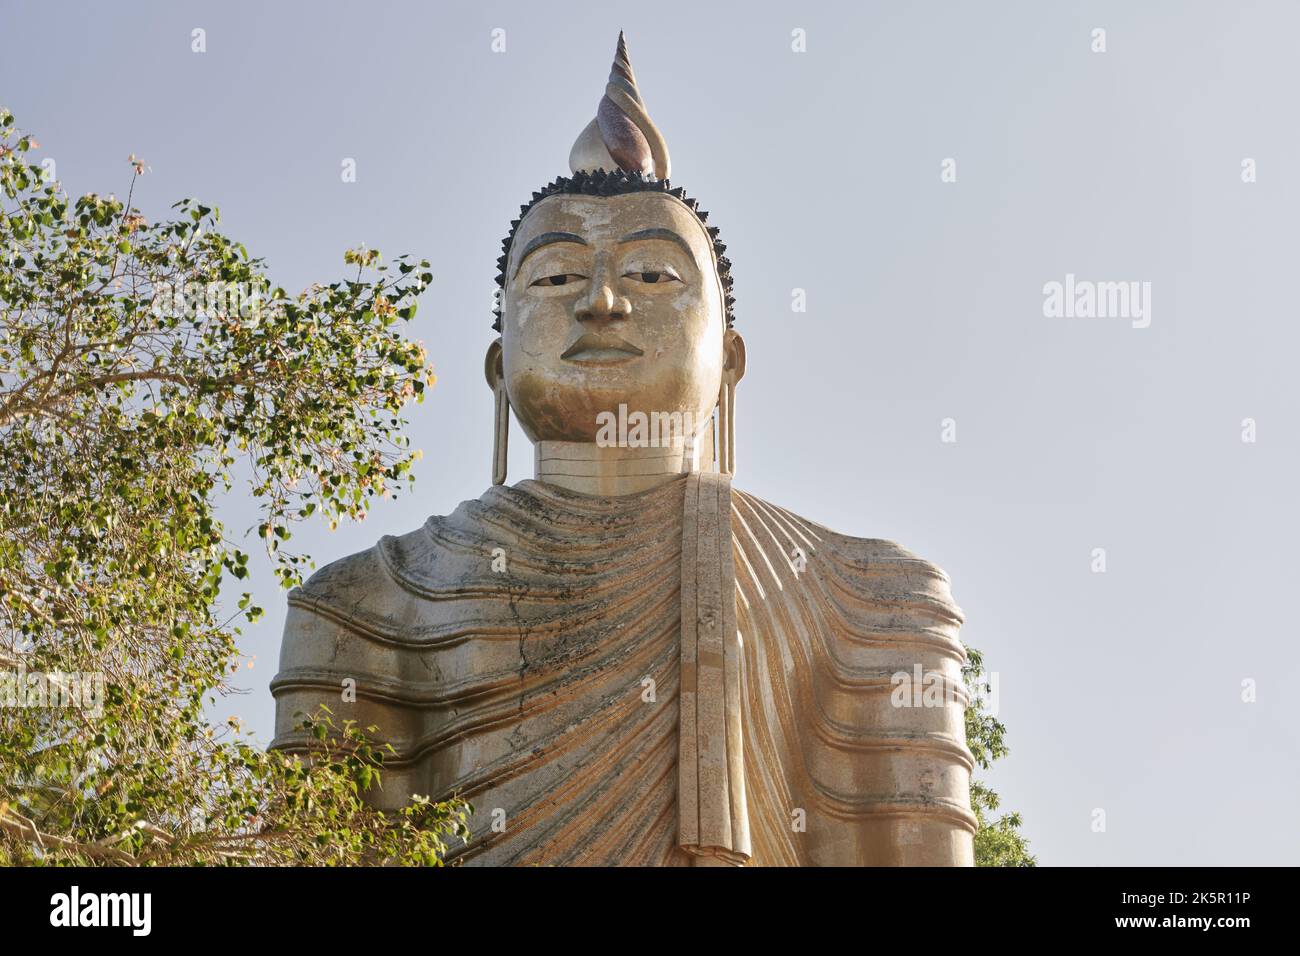 Buddha Statue in the Wewurukannala Vihara temple in Dickwella, Sri Lanka. The largest Buddha in Sri Lanka Stock Photo